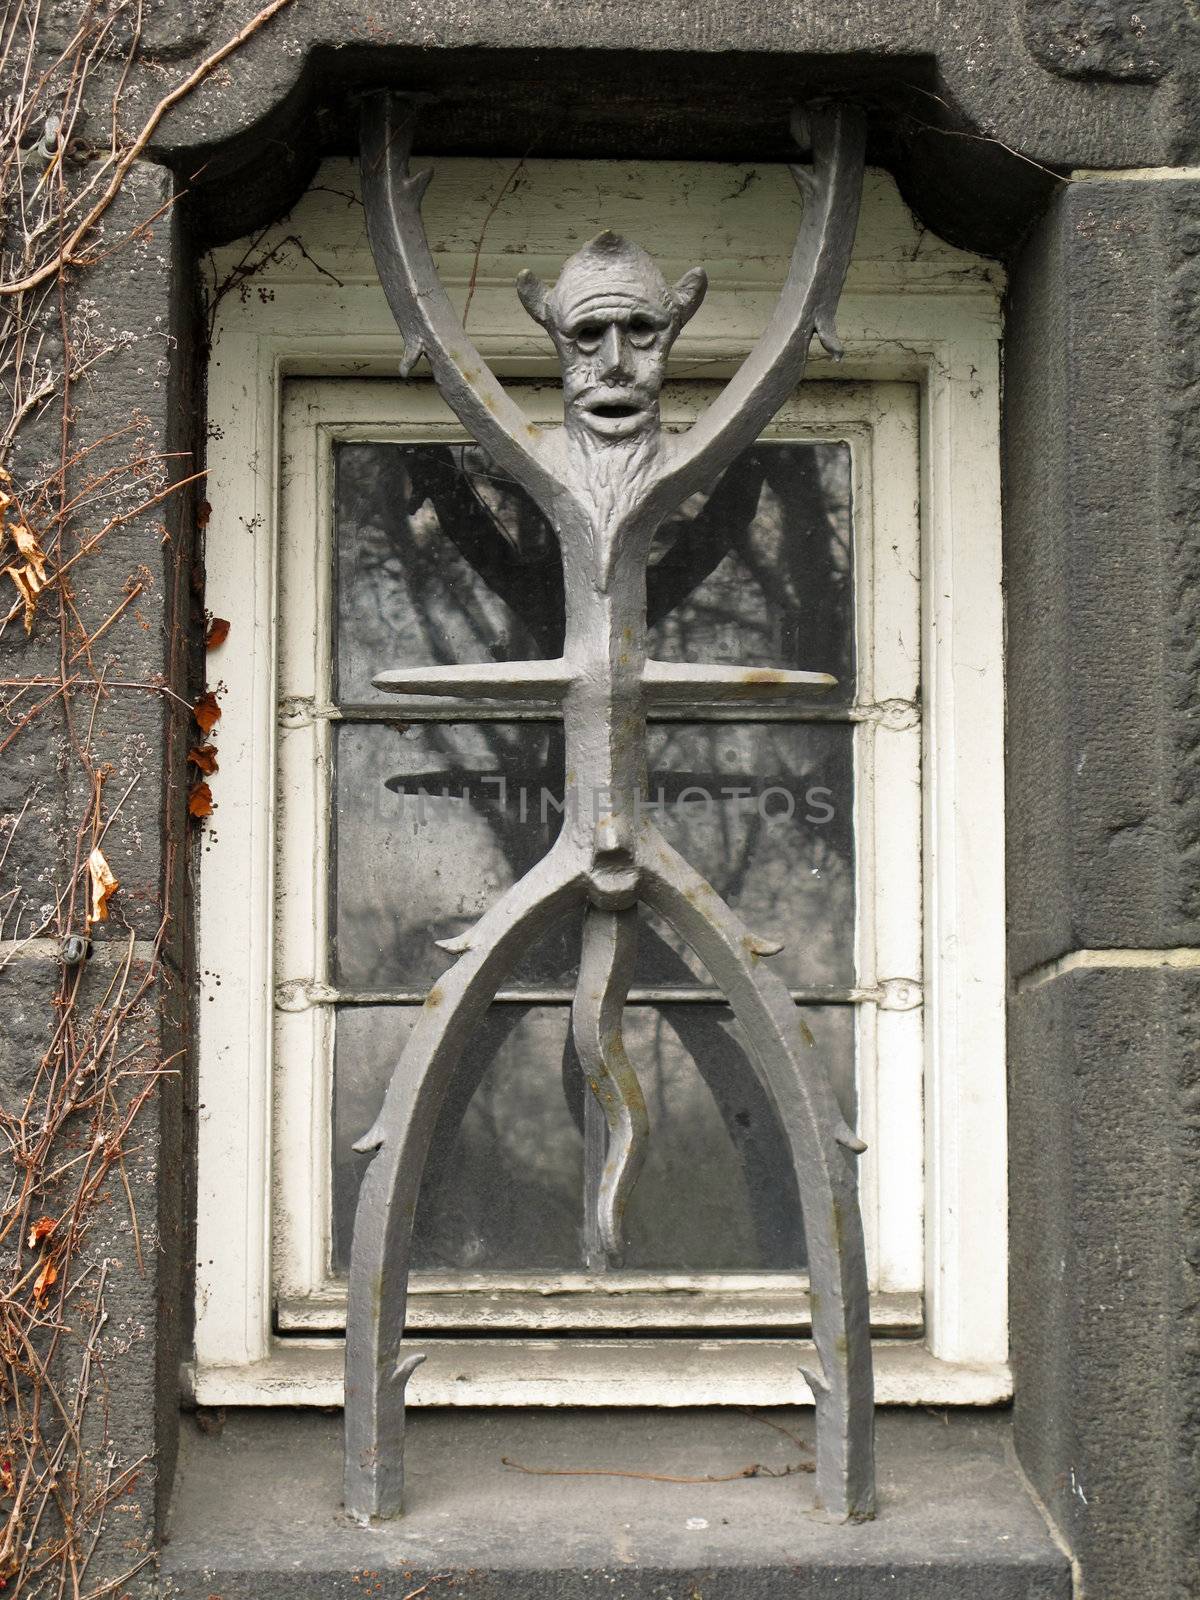 the devil as a window grate by Arrxxx